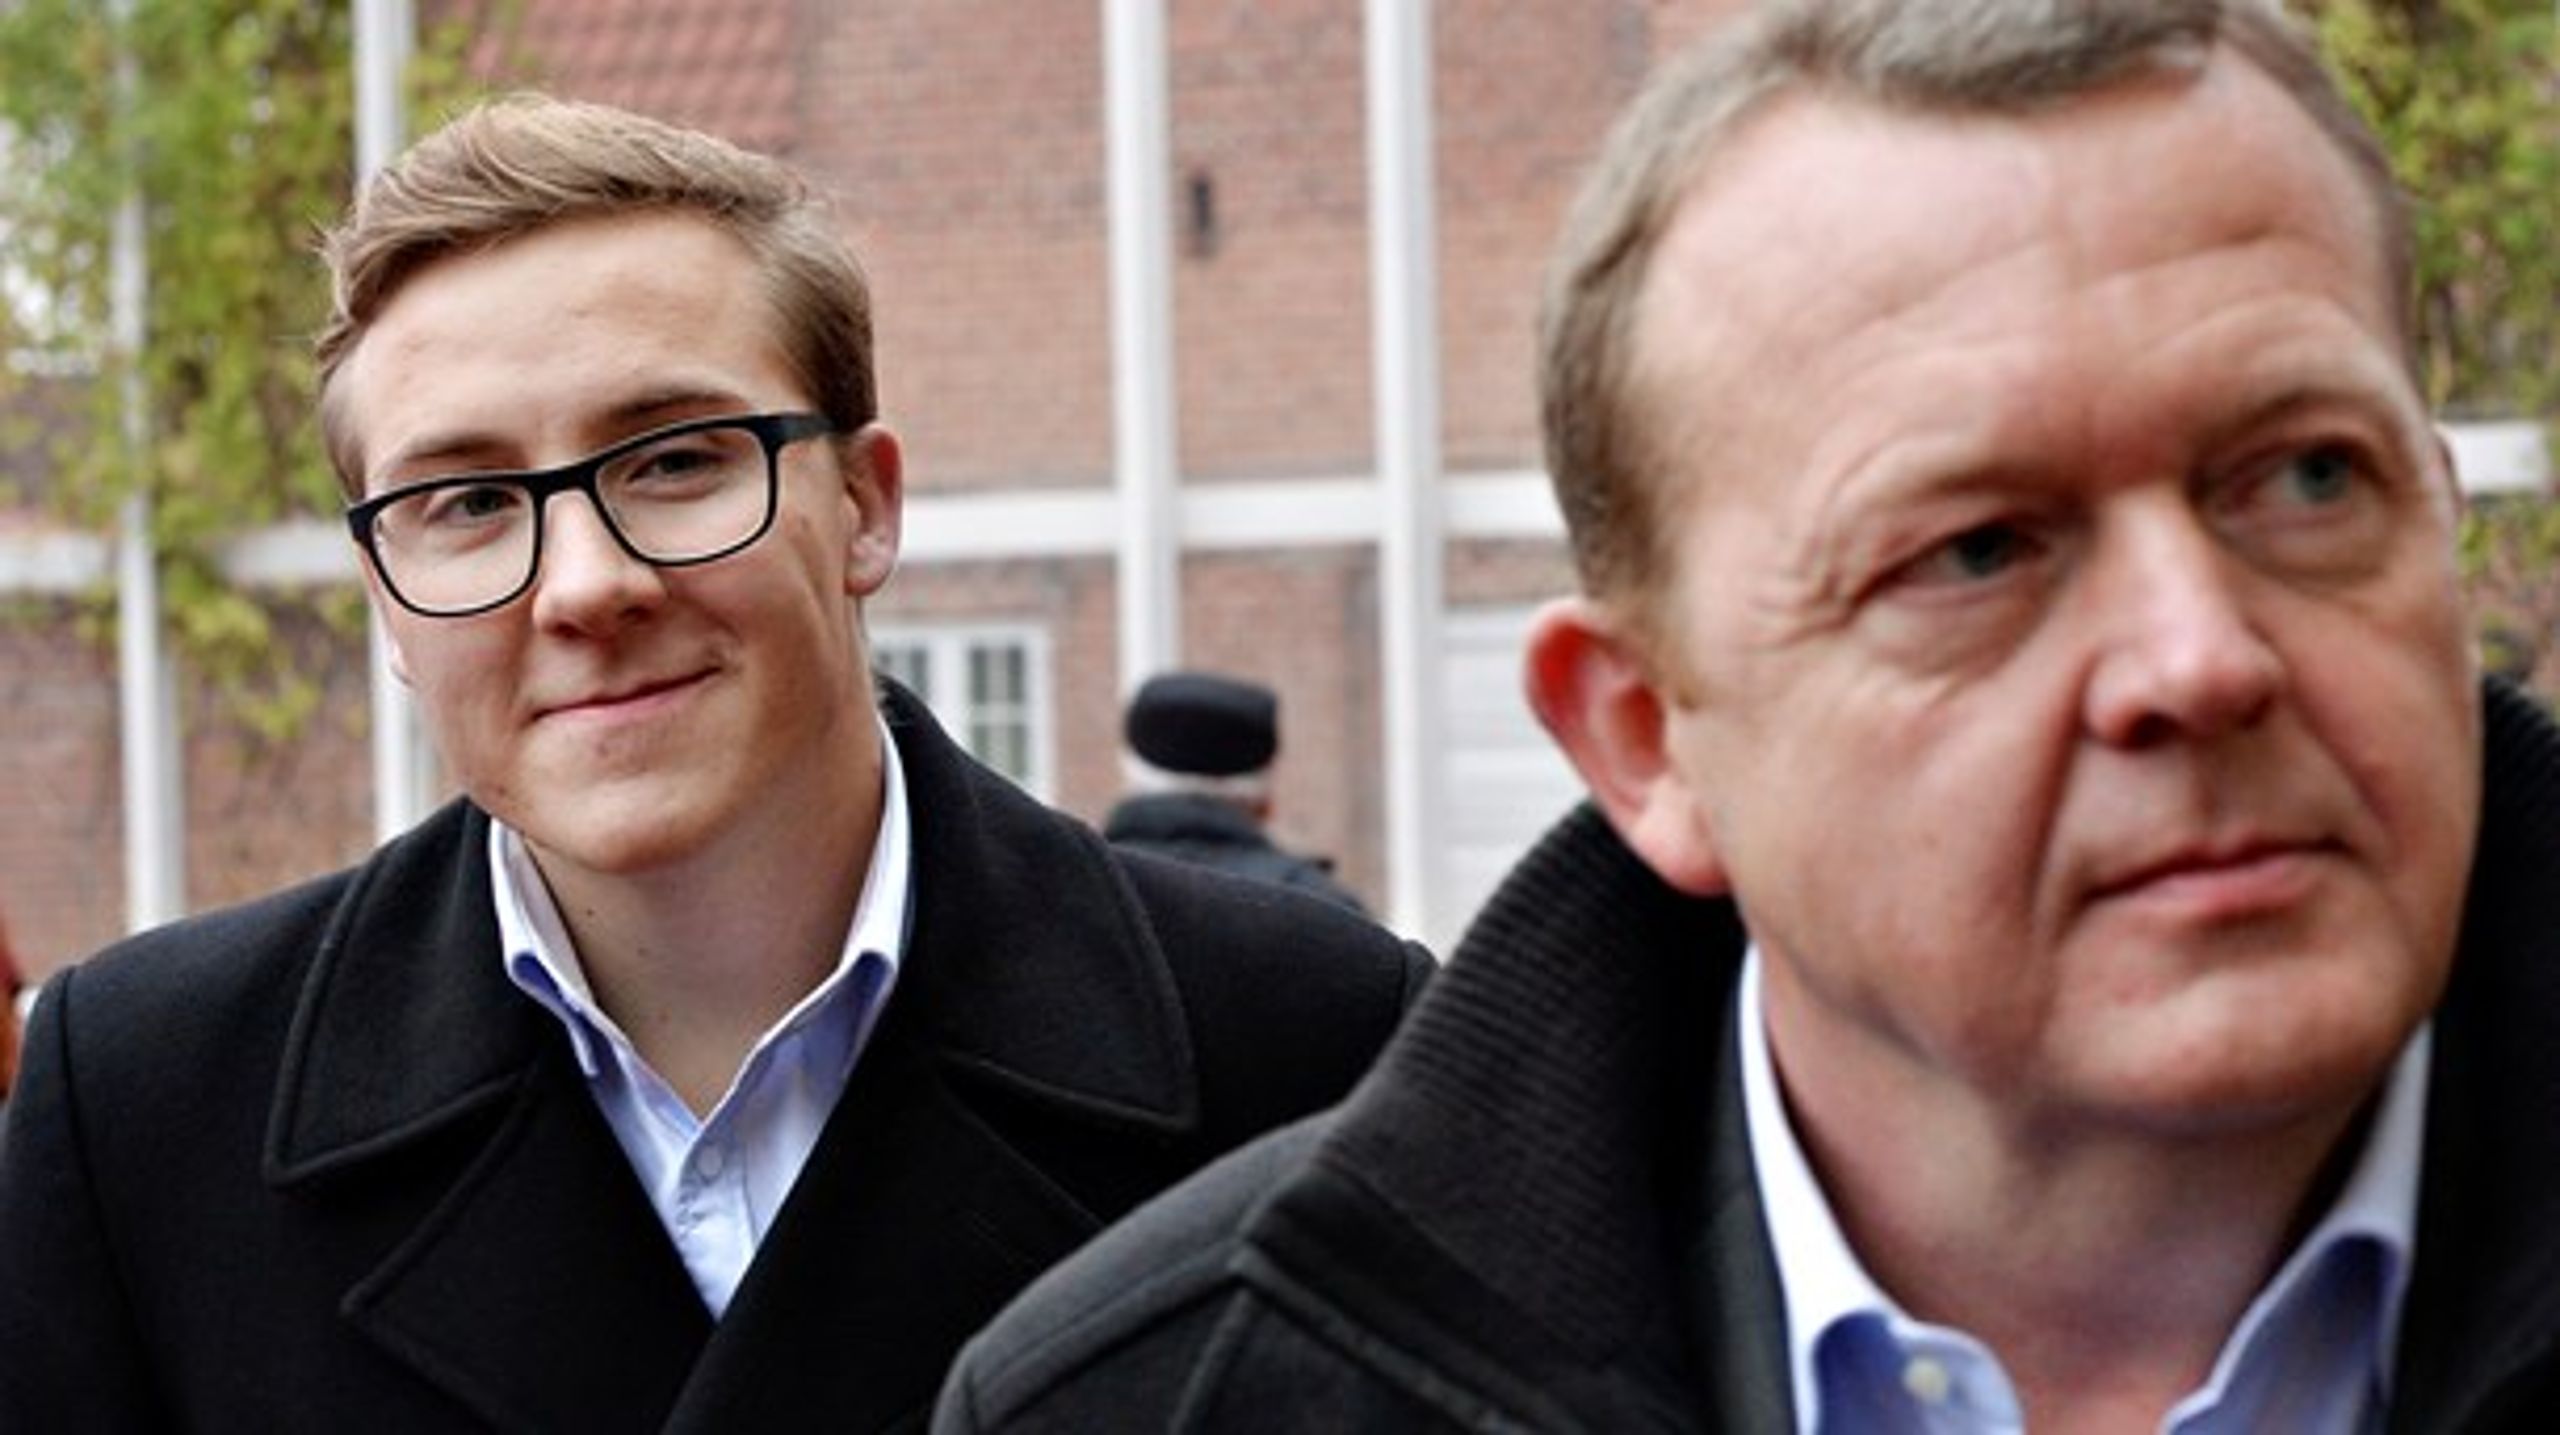 Politik er heller ikke helt nyt for Lars Løkkes søn, da han
tidligere har siddet i regionsrådet for Venstre i Region Hovedstaden.